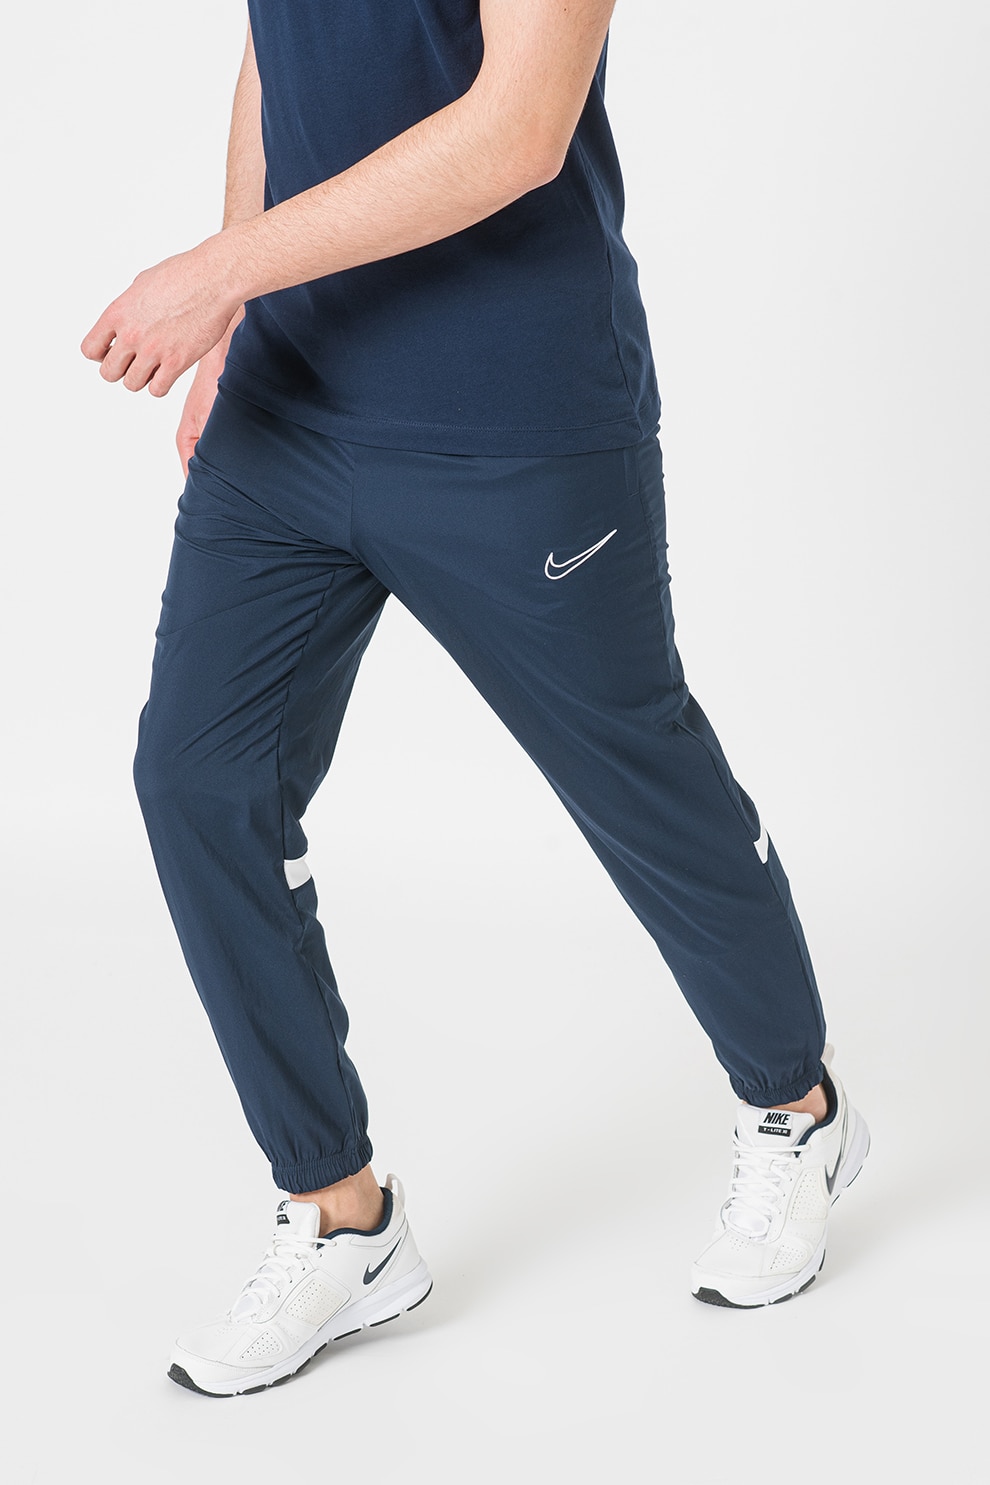 Fatal Related Rough sleep Nike, Pantaloni cu tehnologie Dri-Fit, pentru fotbal - eMAG.ro